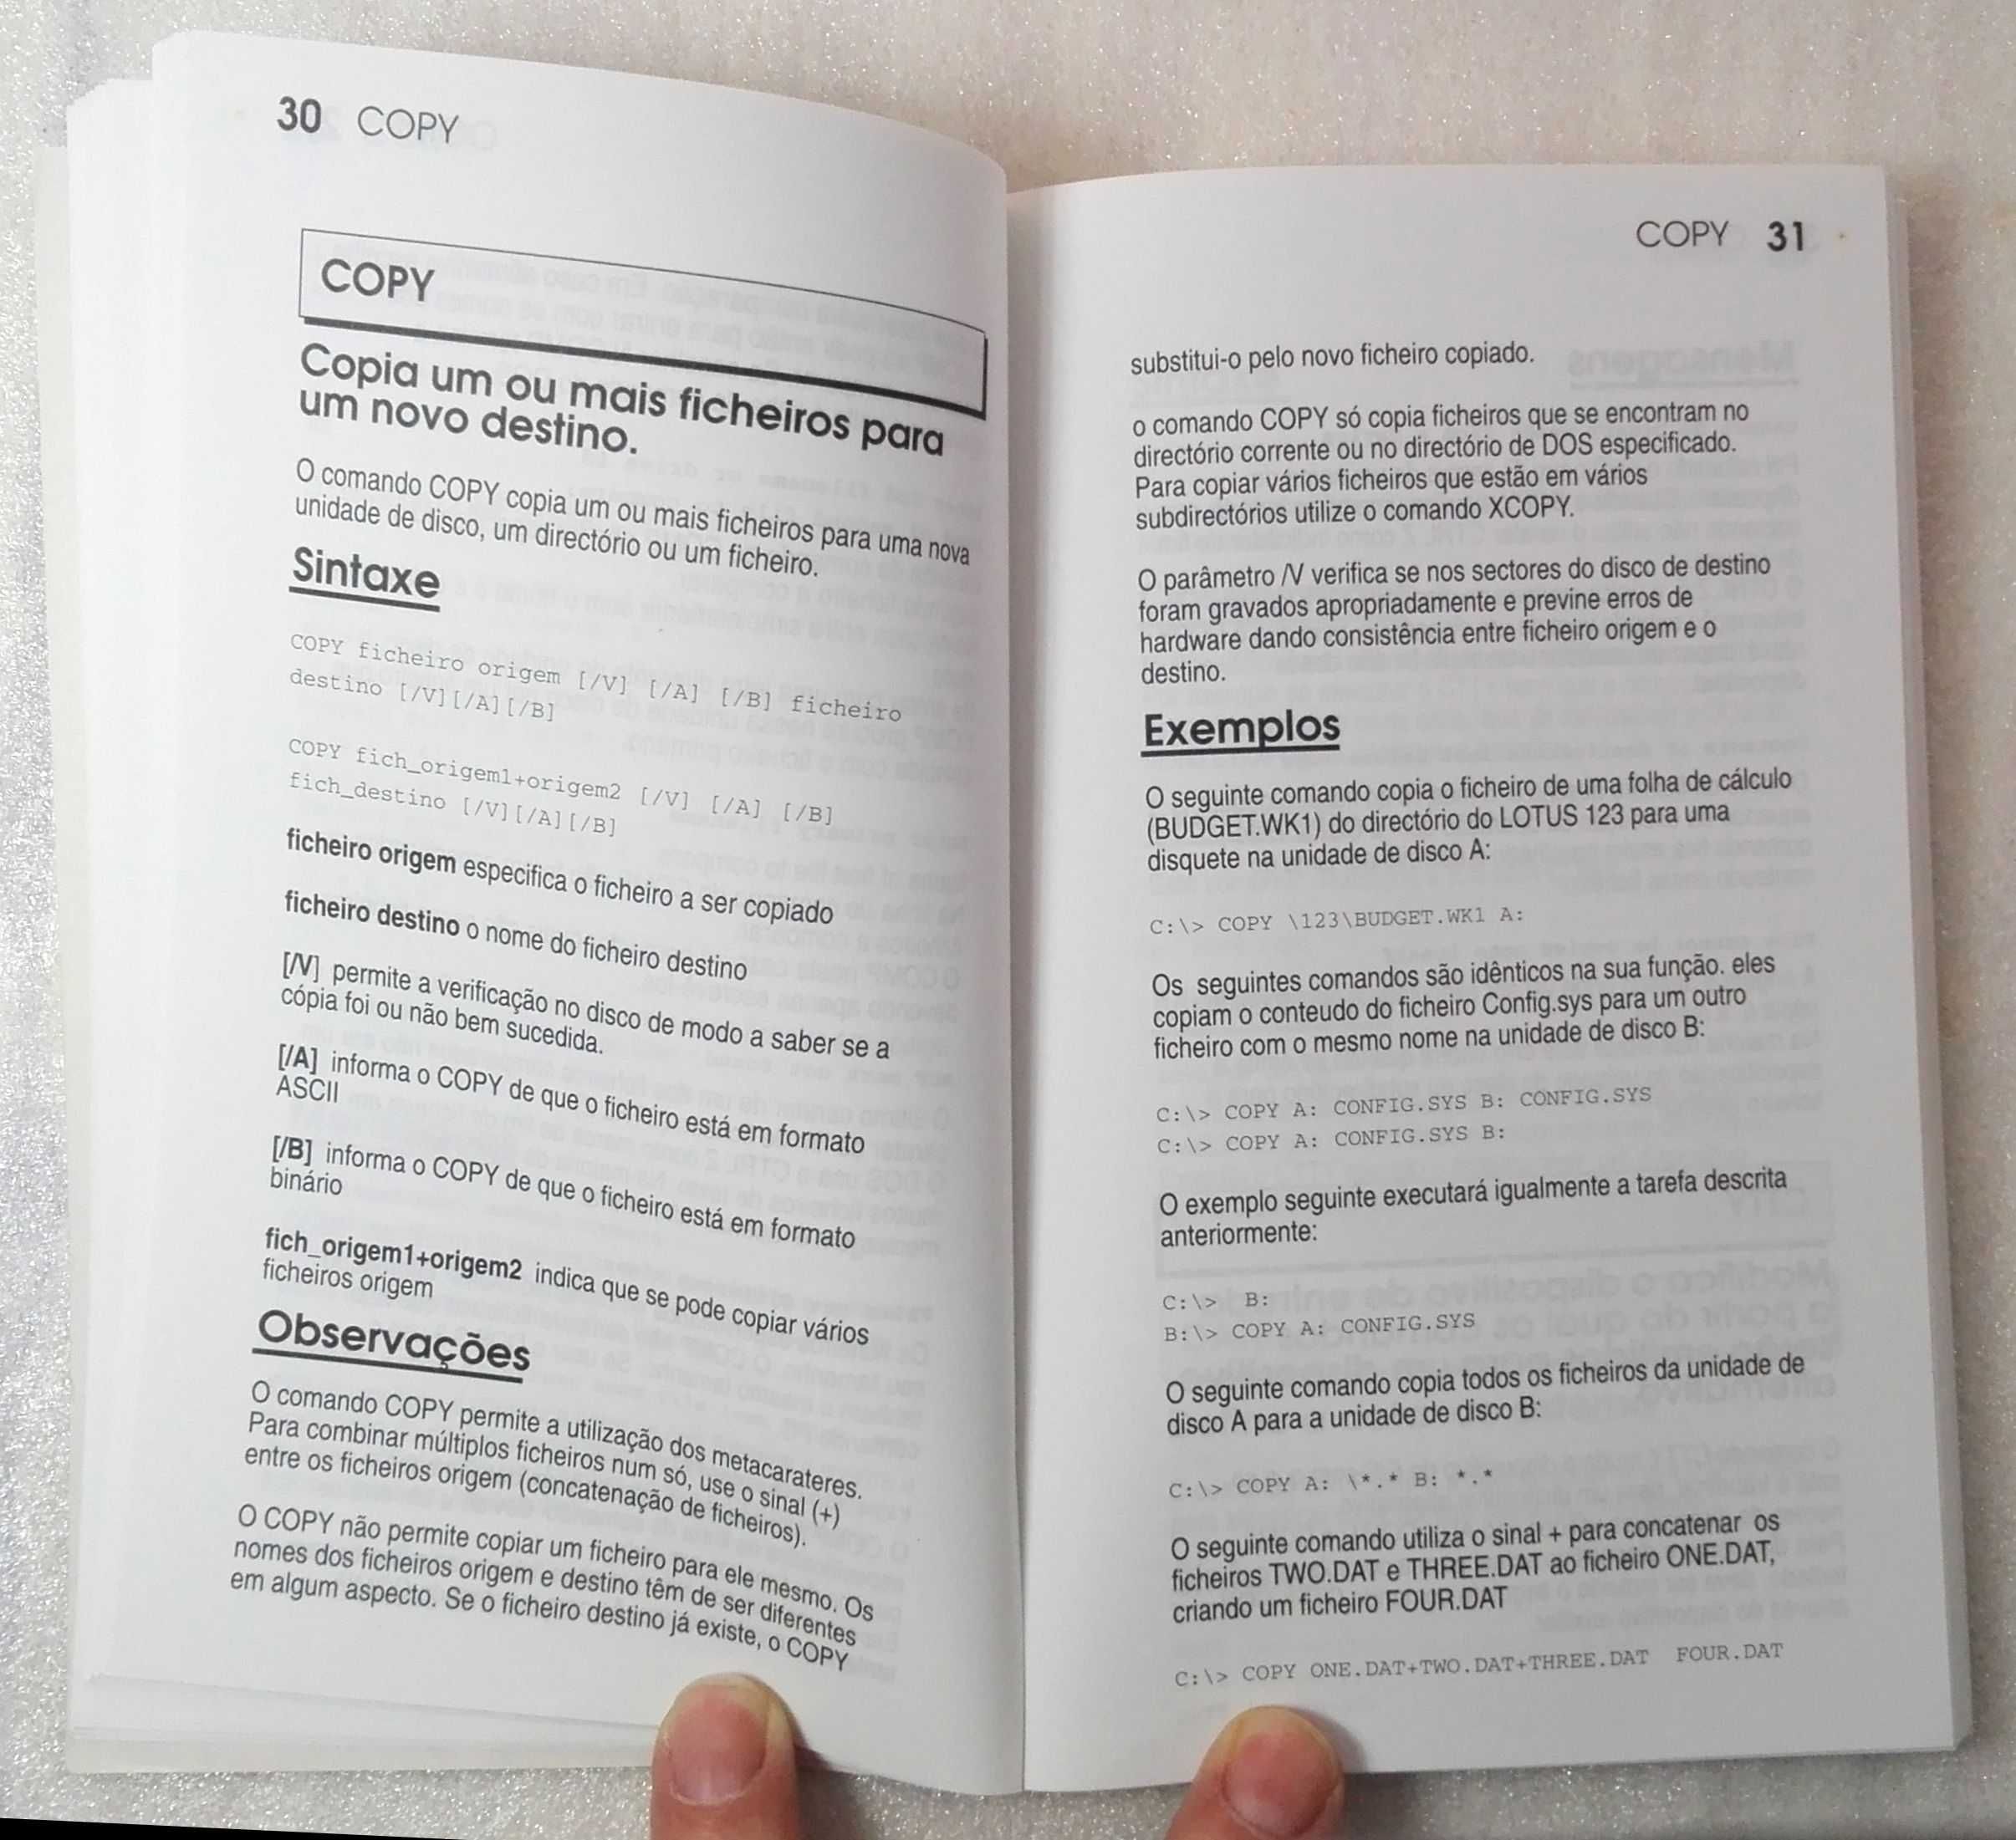 Livro DOS 6 -Manual de Bolso